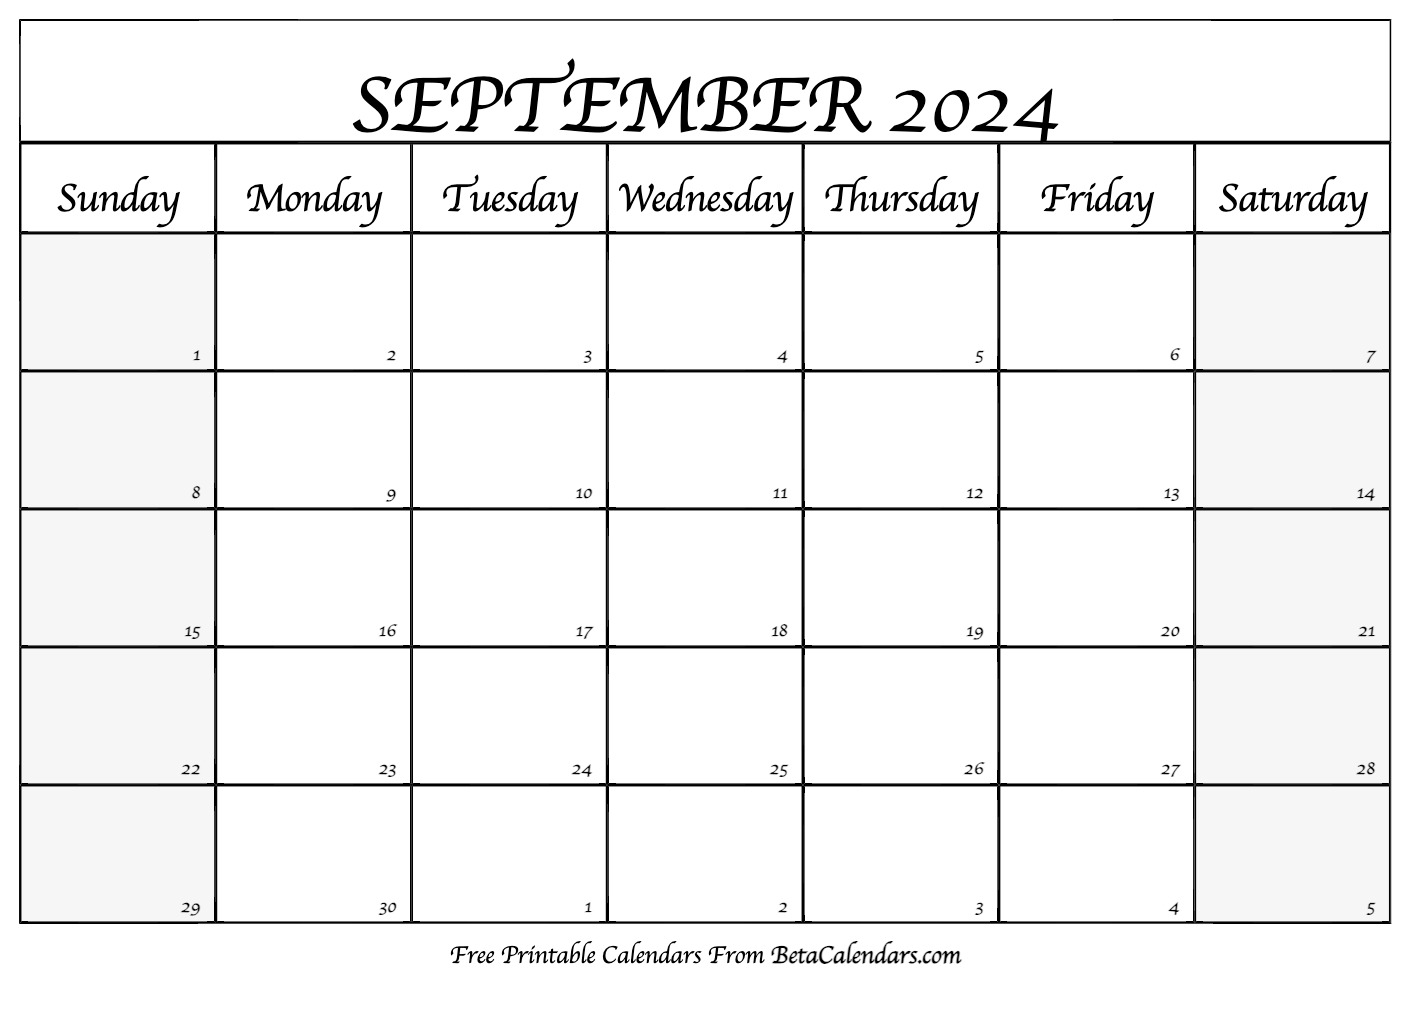 Blank September 2024 Calendar Template